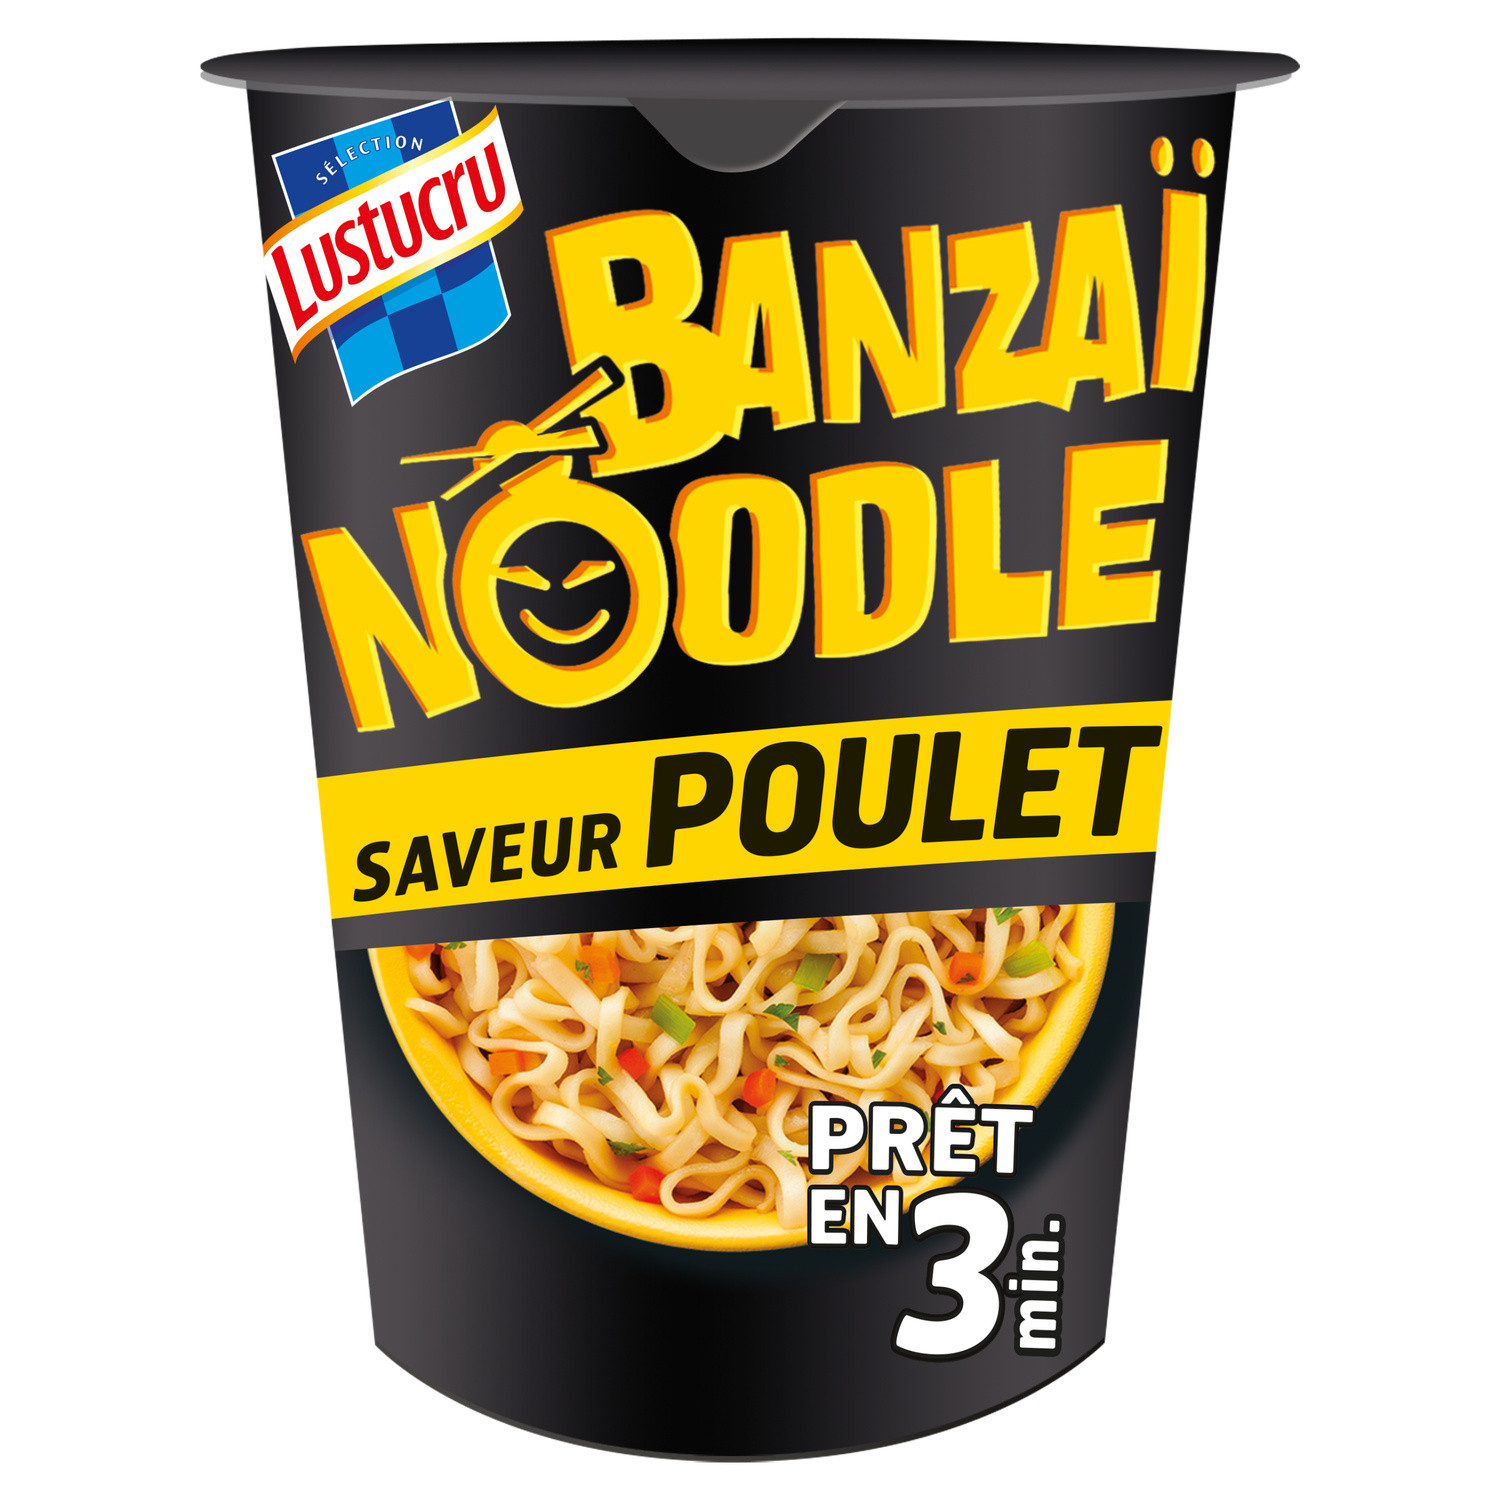 Banzai noodle